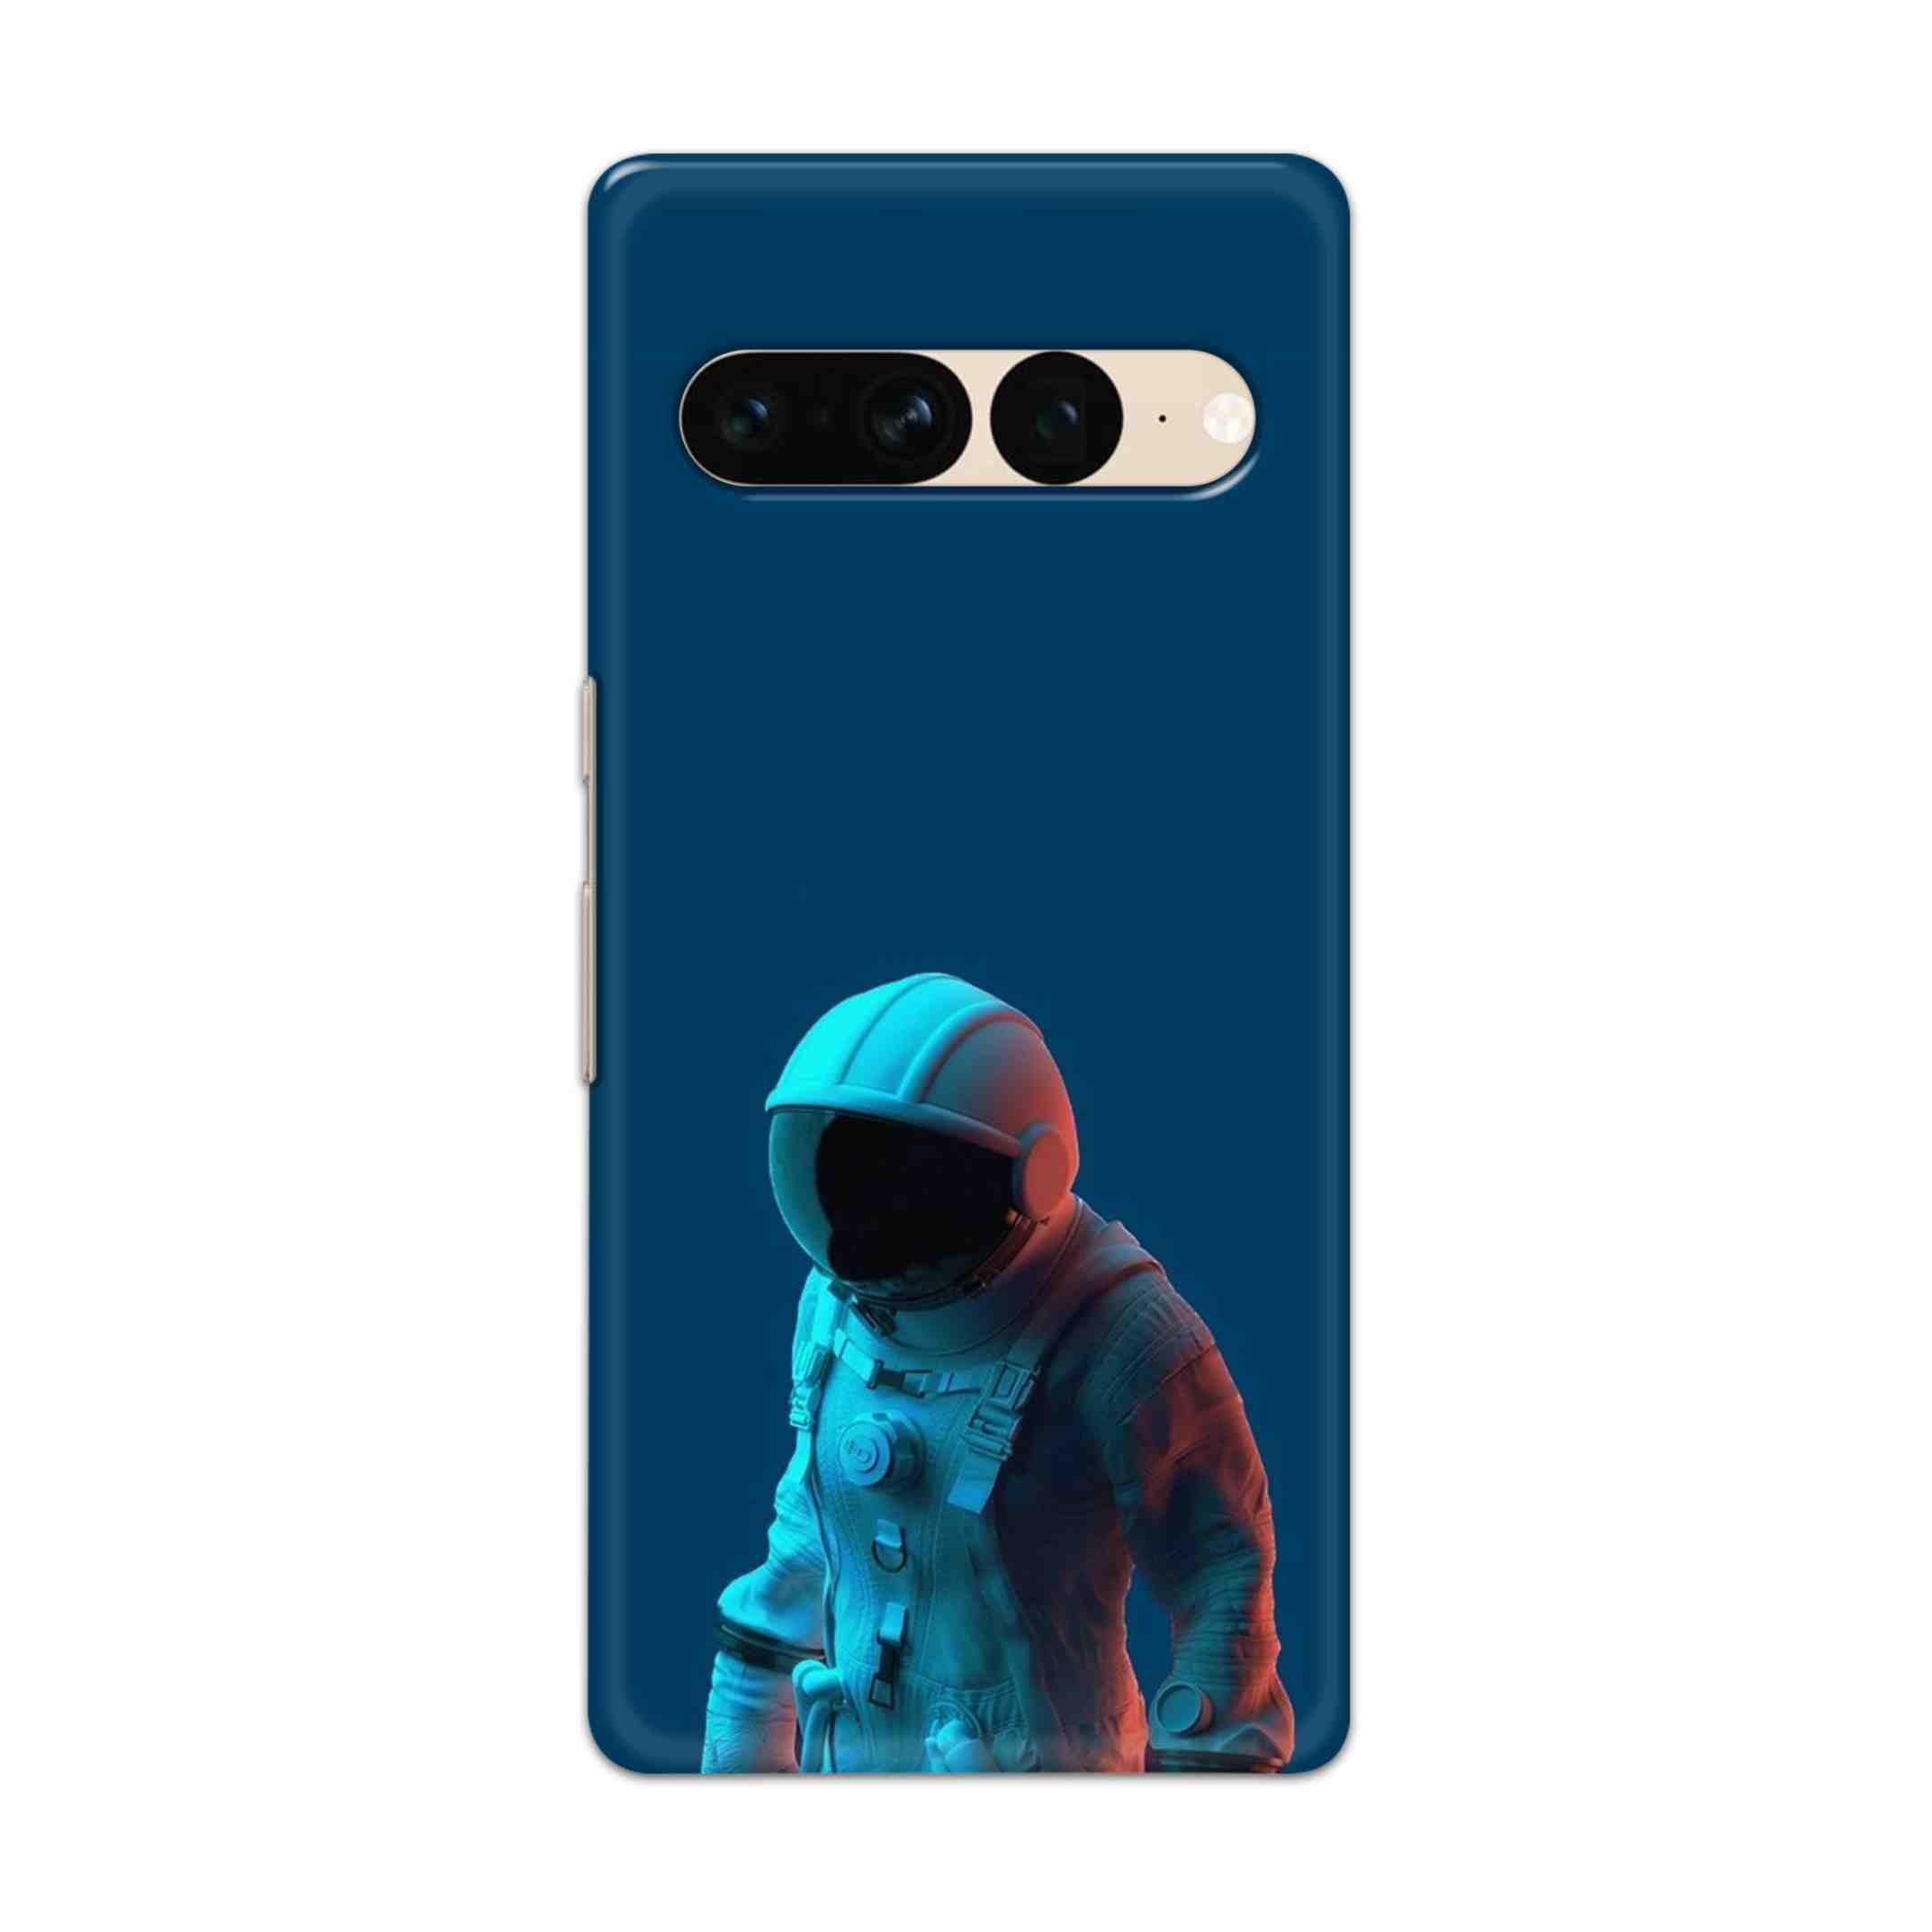 Buy Blue Astronaut Hard Back Mobile Phone Case Cover For Google Pixel 7 Pro Online